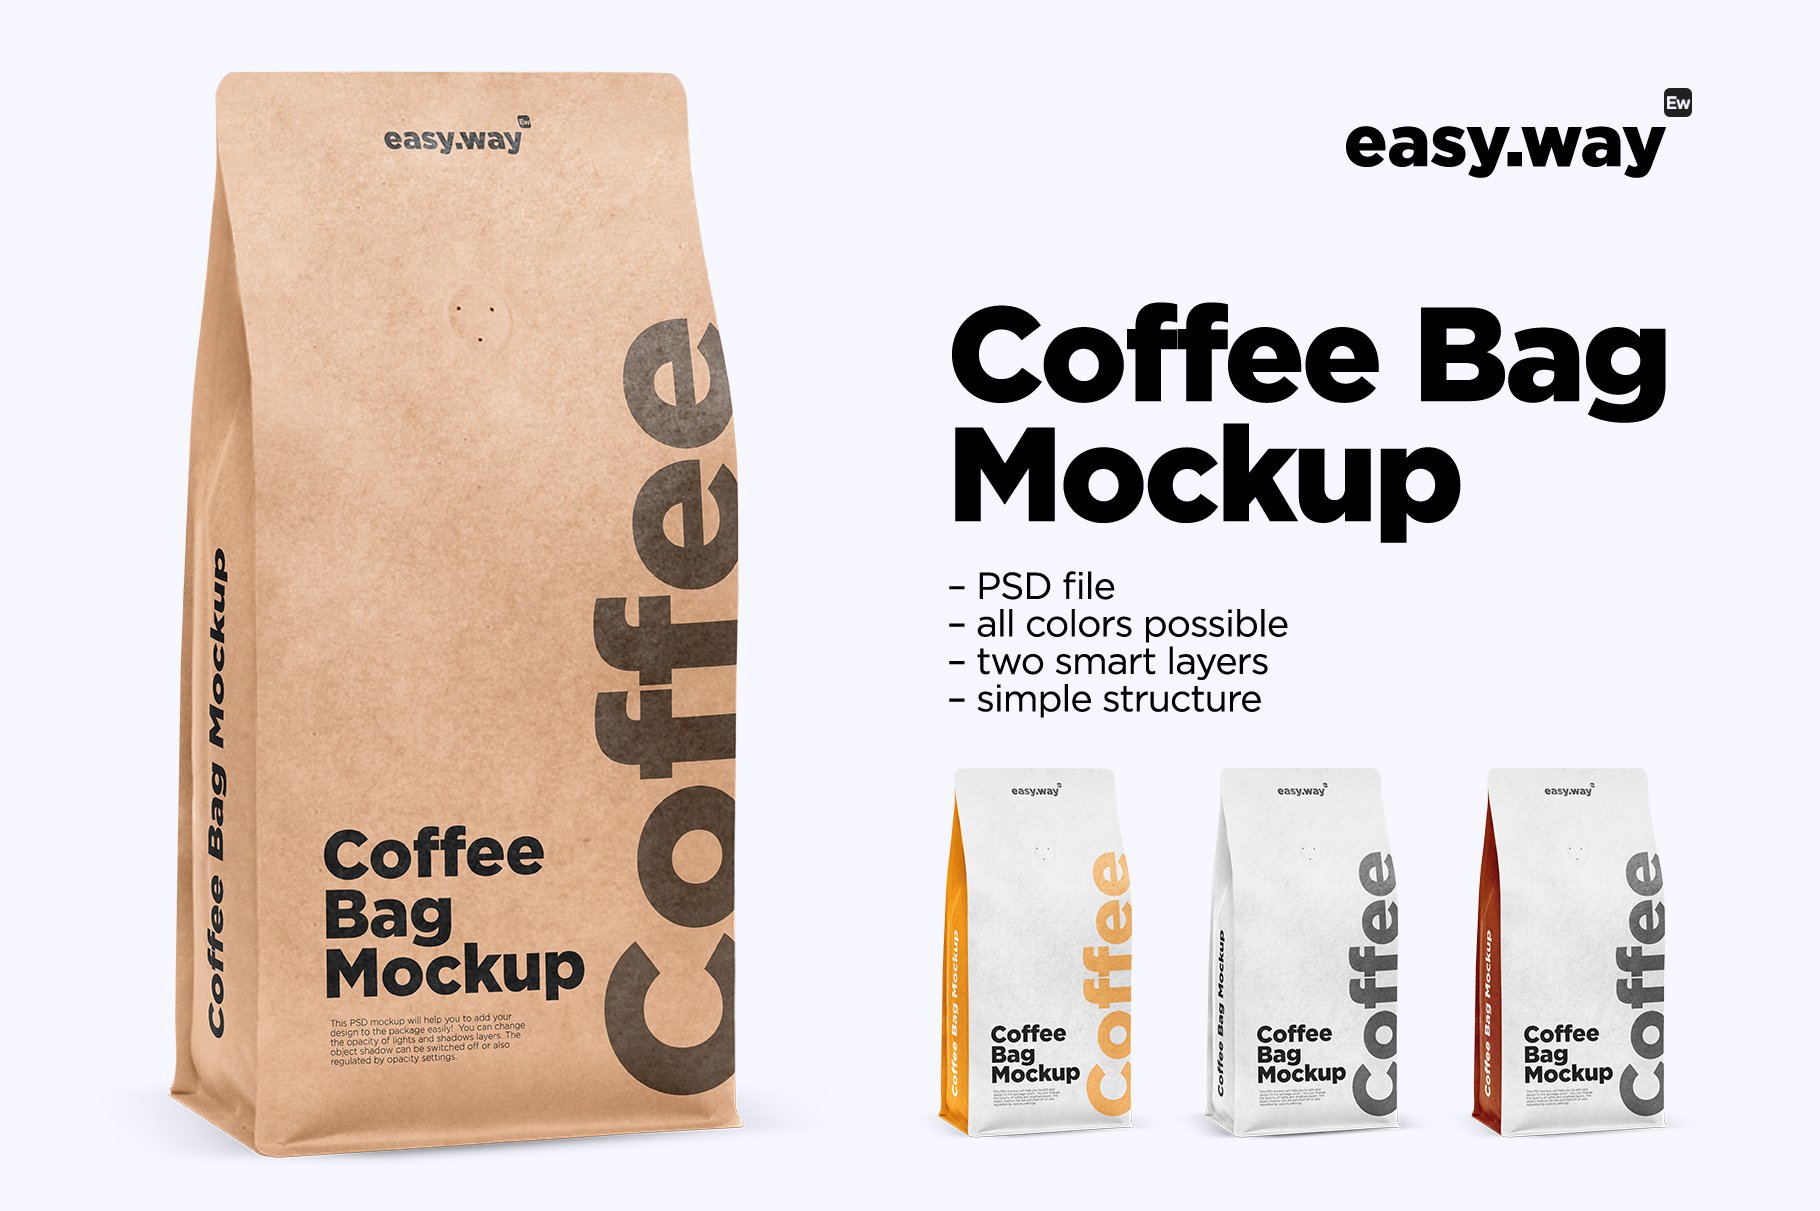 Paper Coffee Bag Mockup cover image.